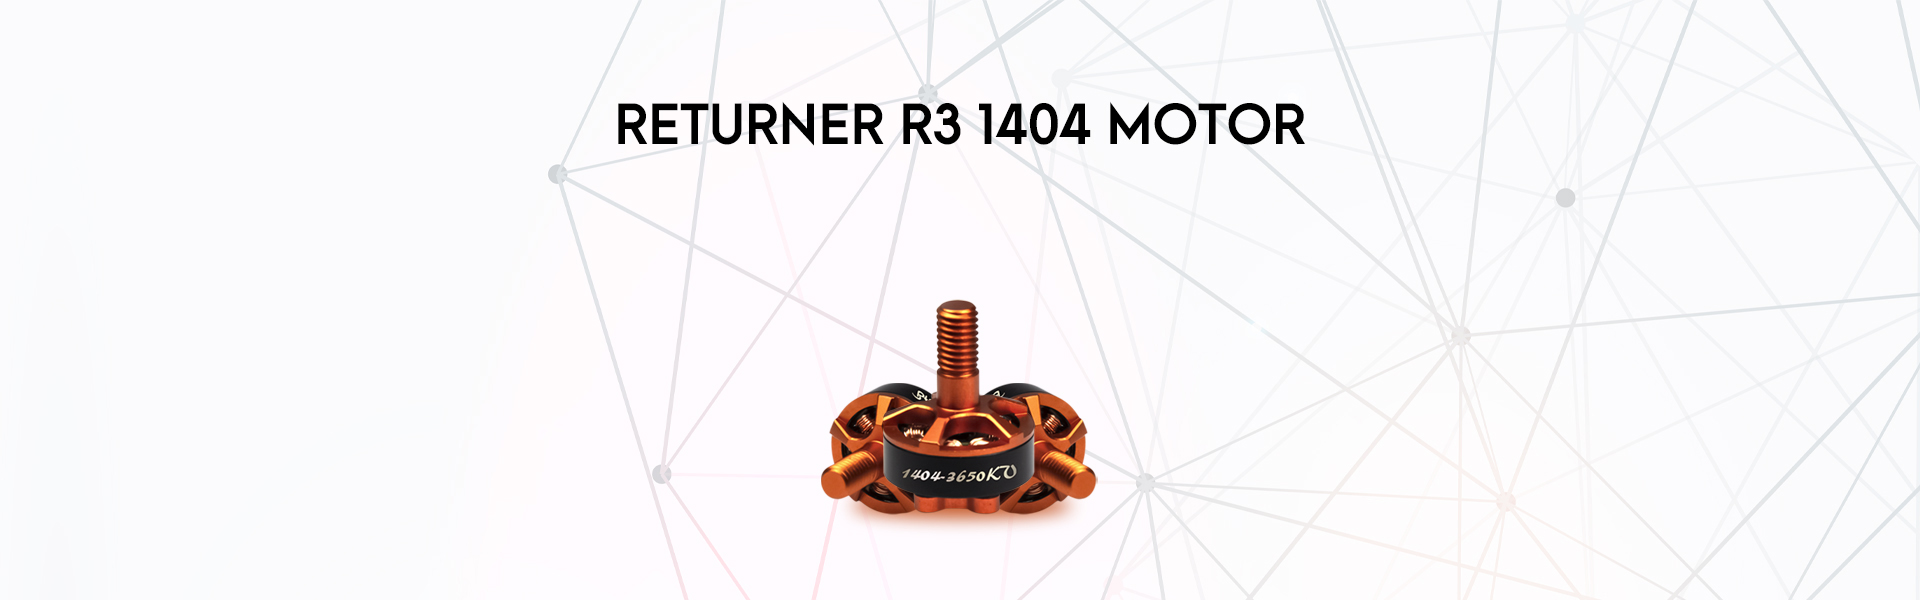 Returner R3 1404 Motor